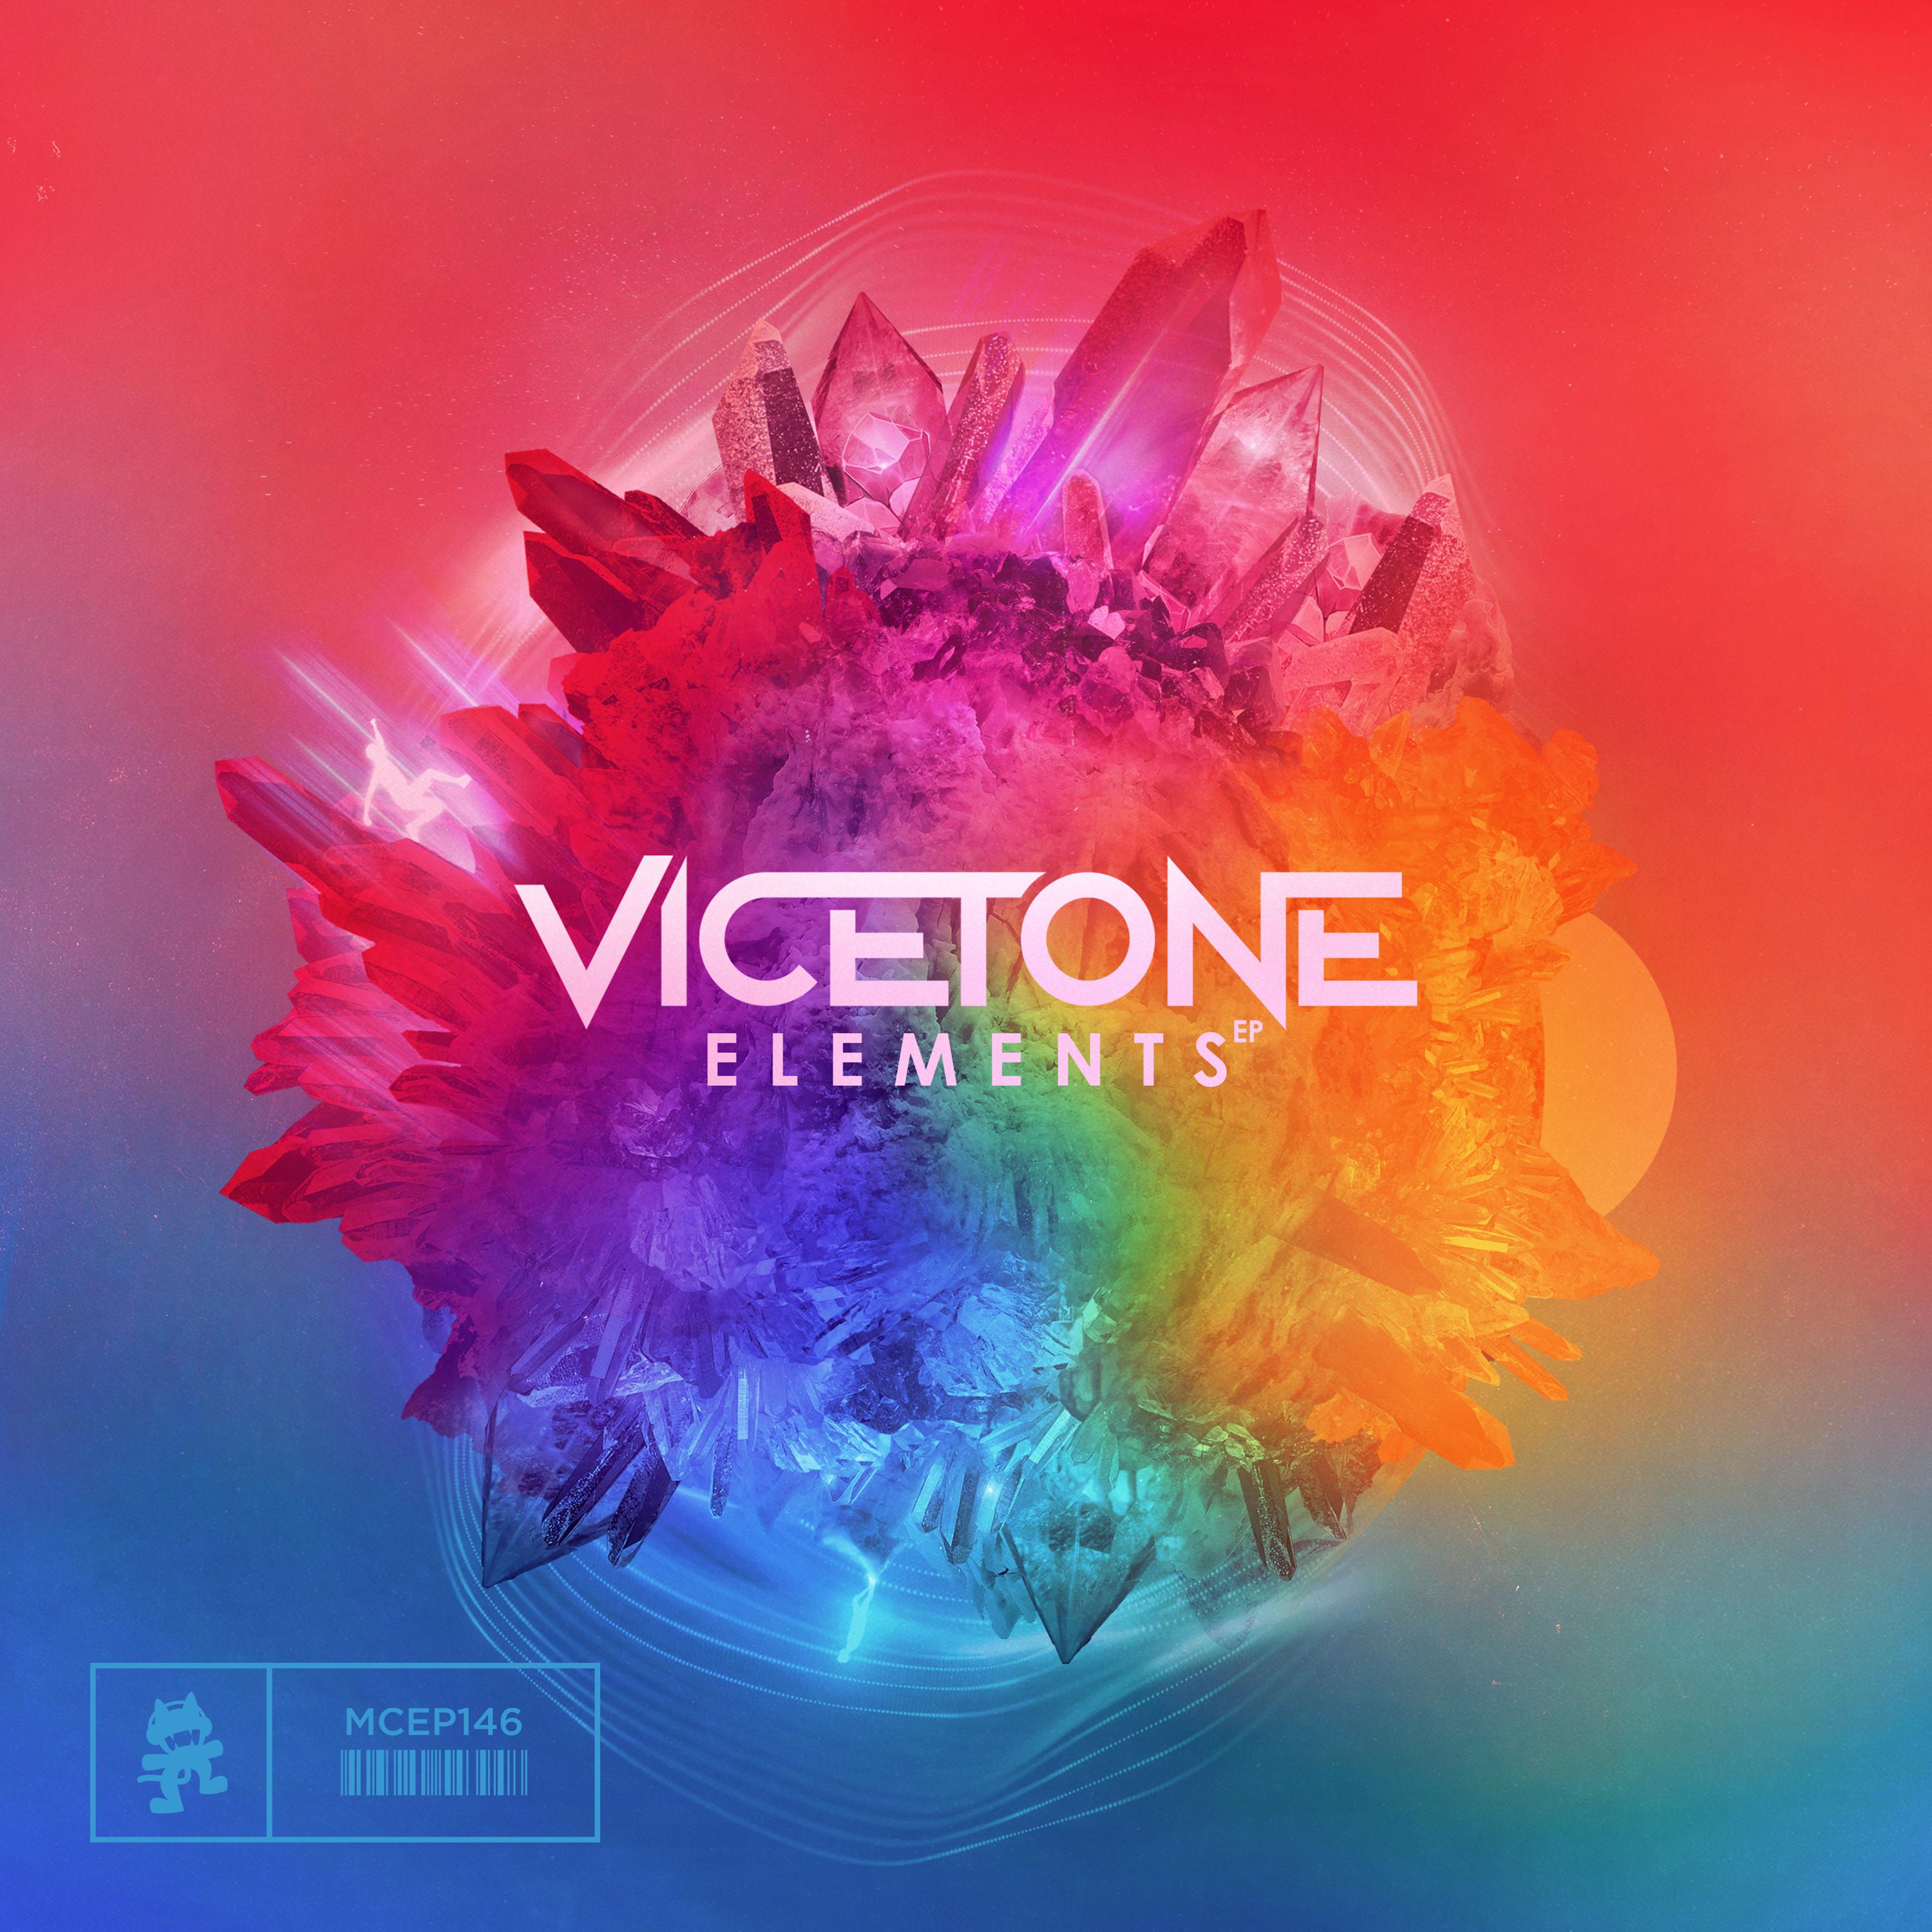 Something Strange歌词 歌手Vicetone / Haley Reinhart-专辑Elements-单曲《Something Strange》LRC歌词下载